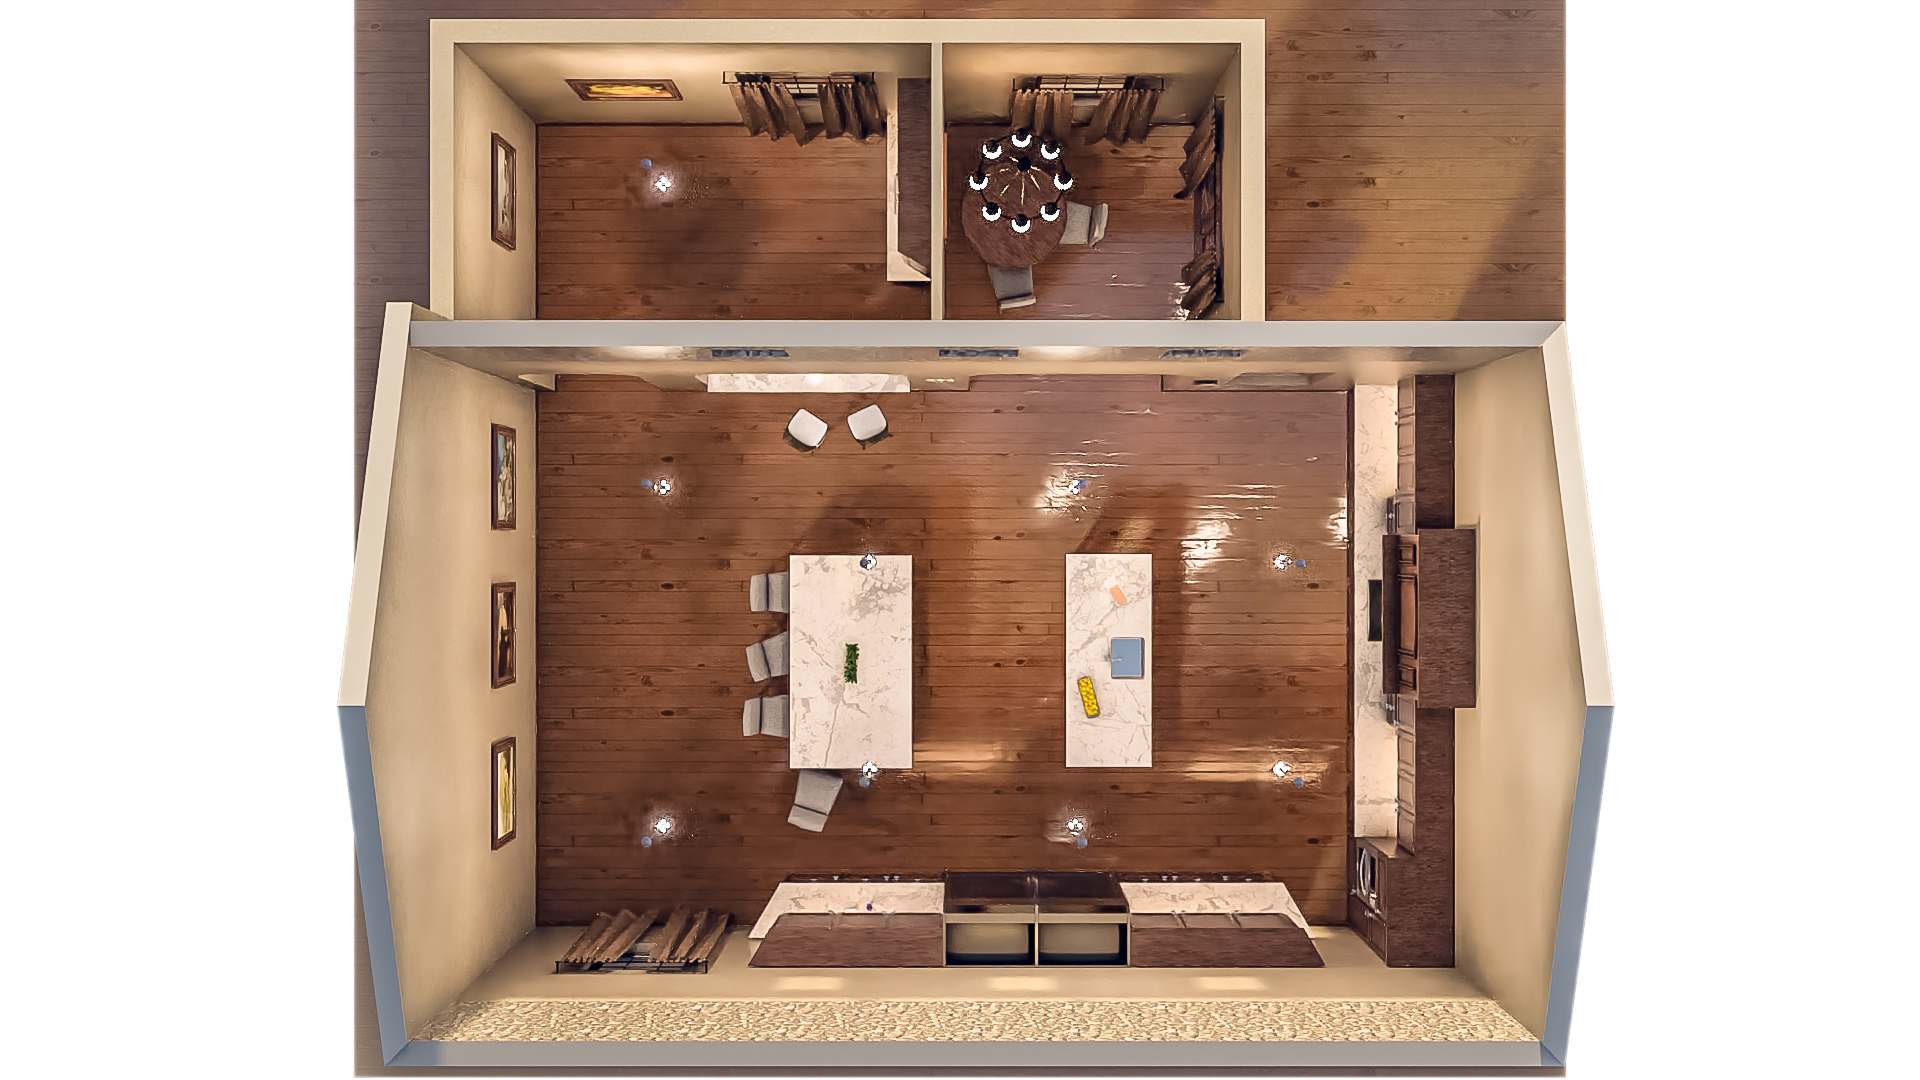 Lencino Kitchen Space by: Tesla3dCorp, 3D Models by Daz 3D